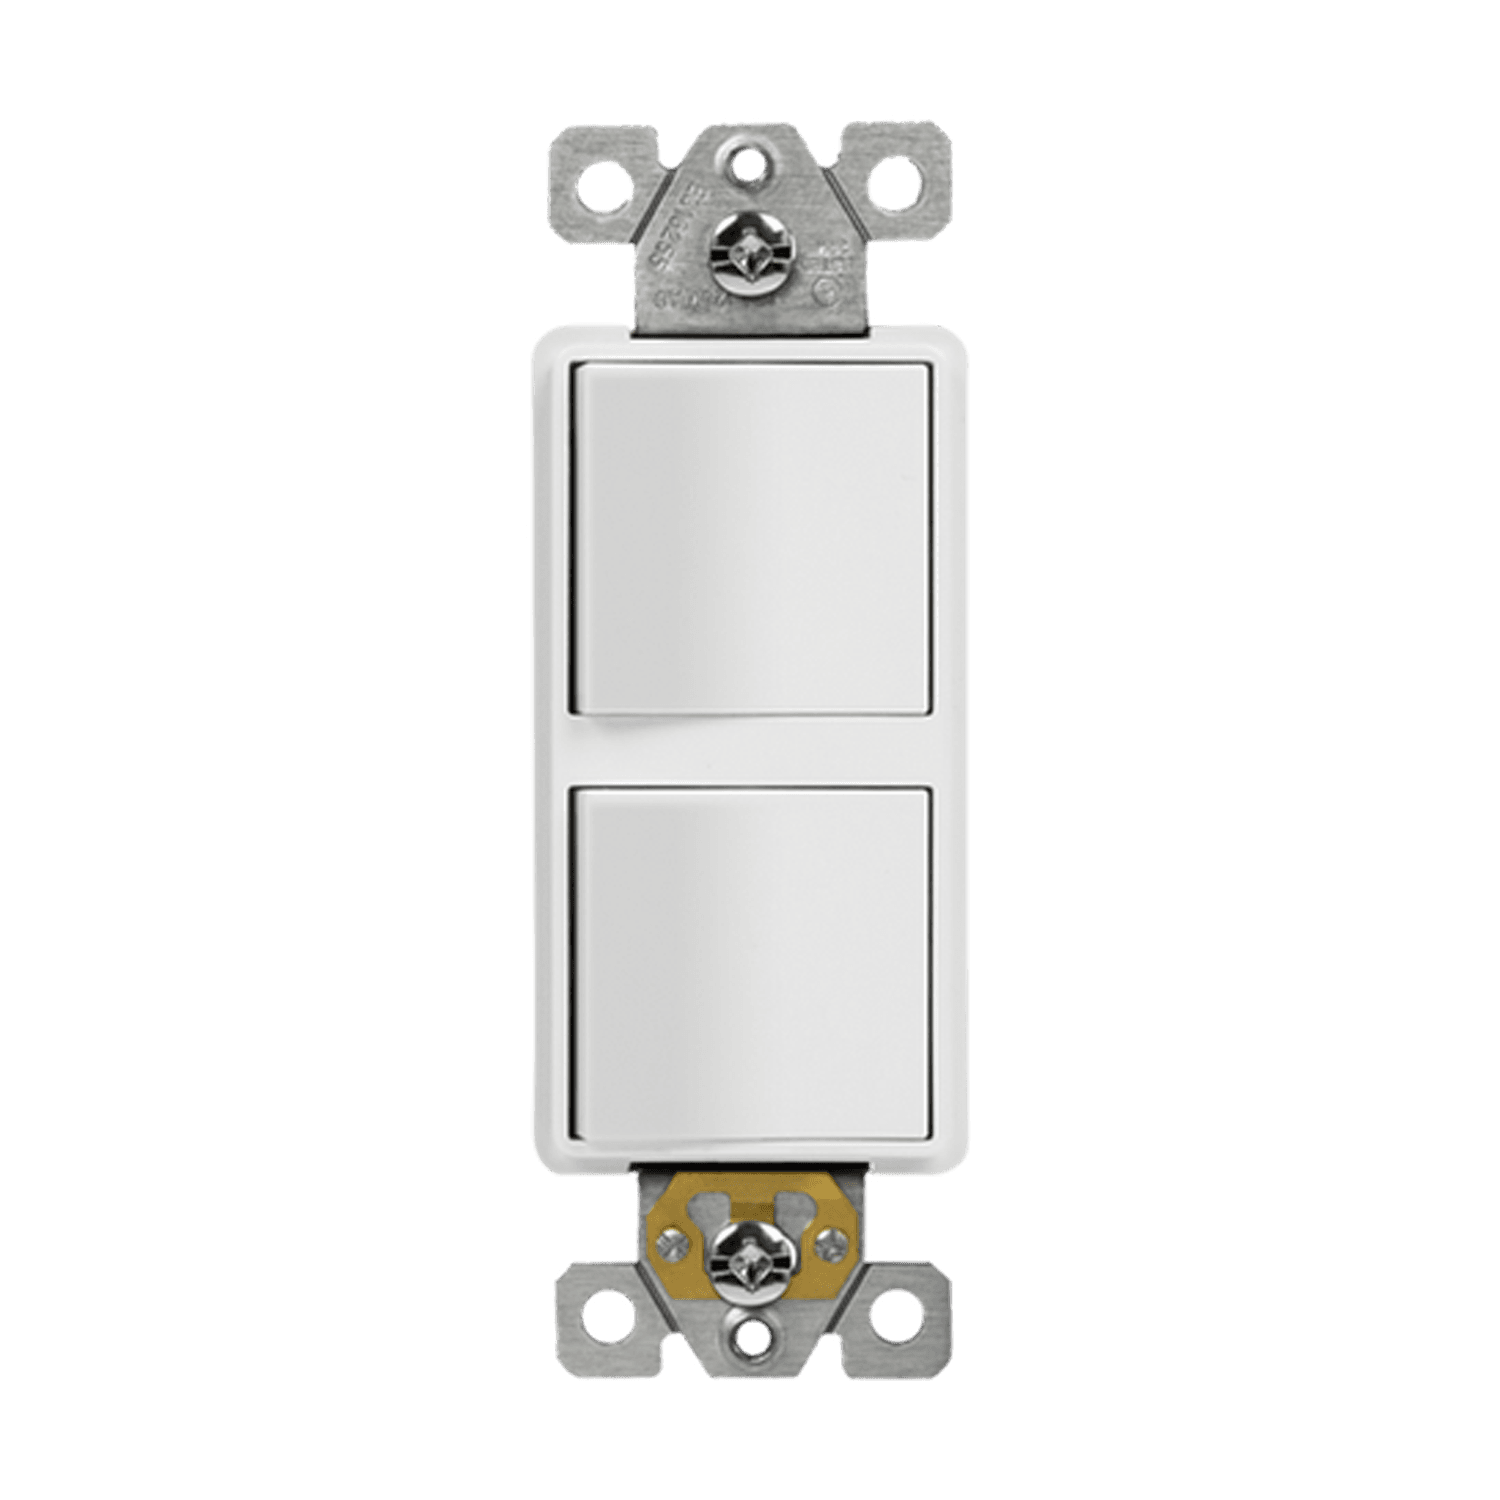 Enerlites 62834-W Dual Rocker Switches, Single Pole- White